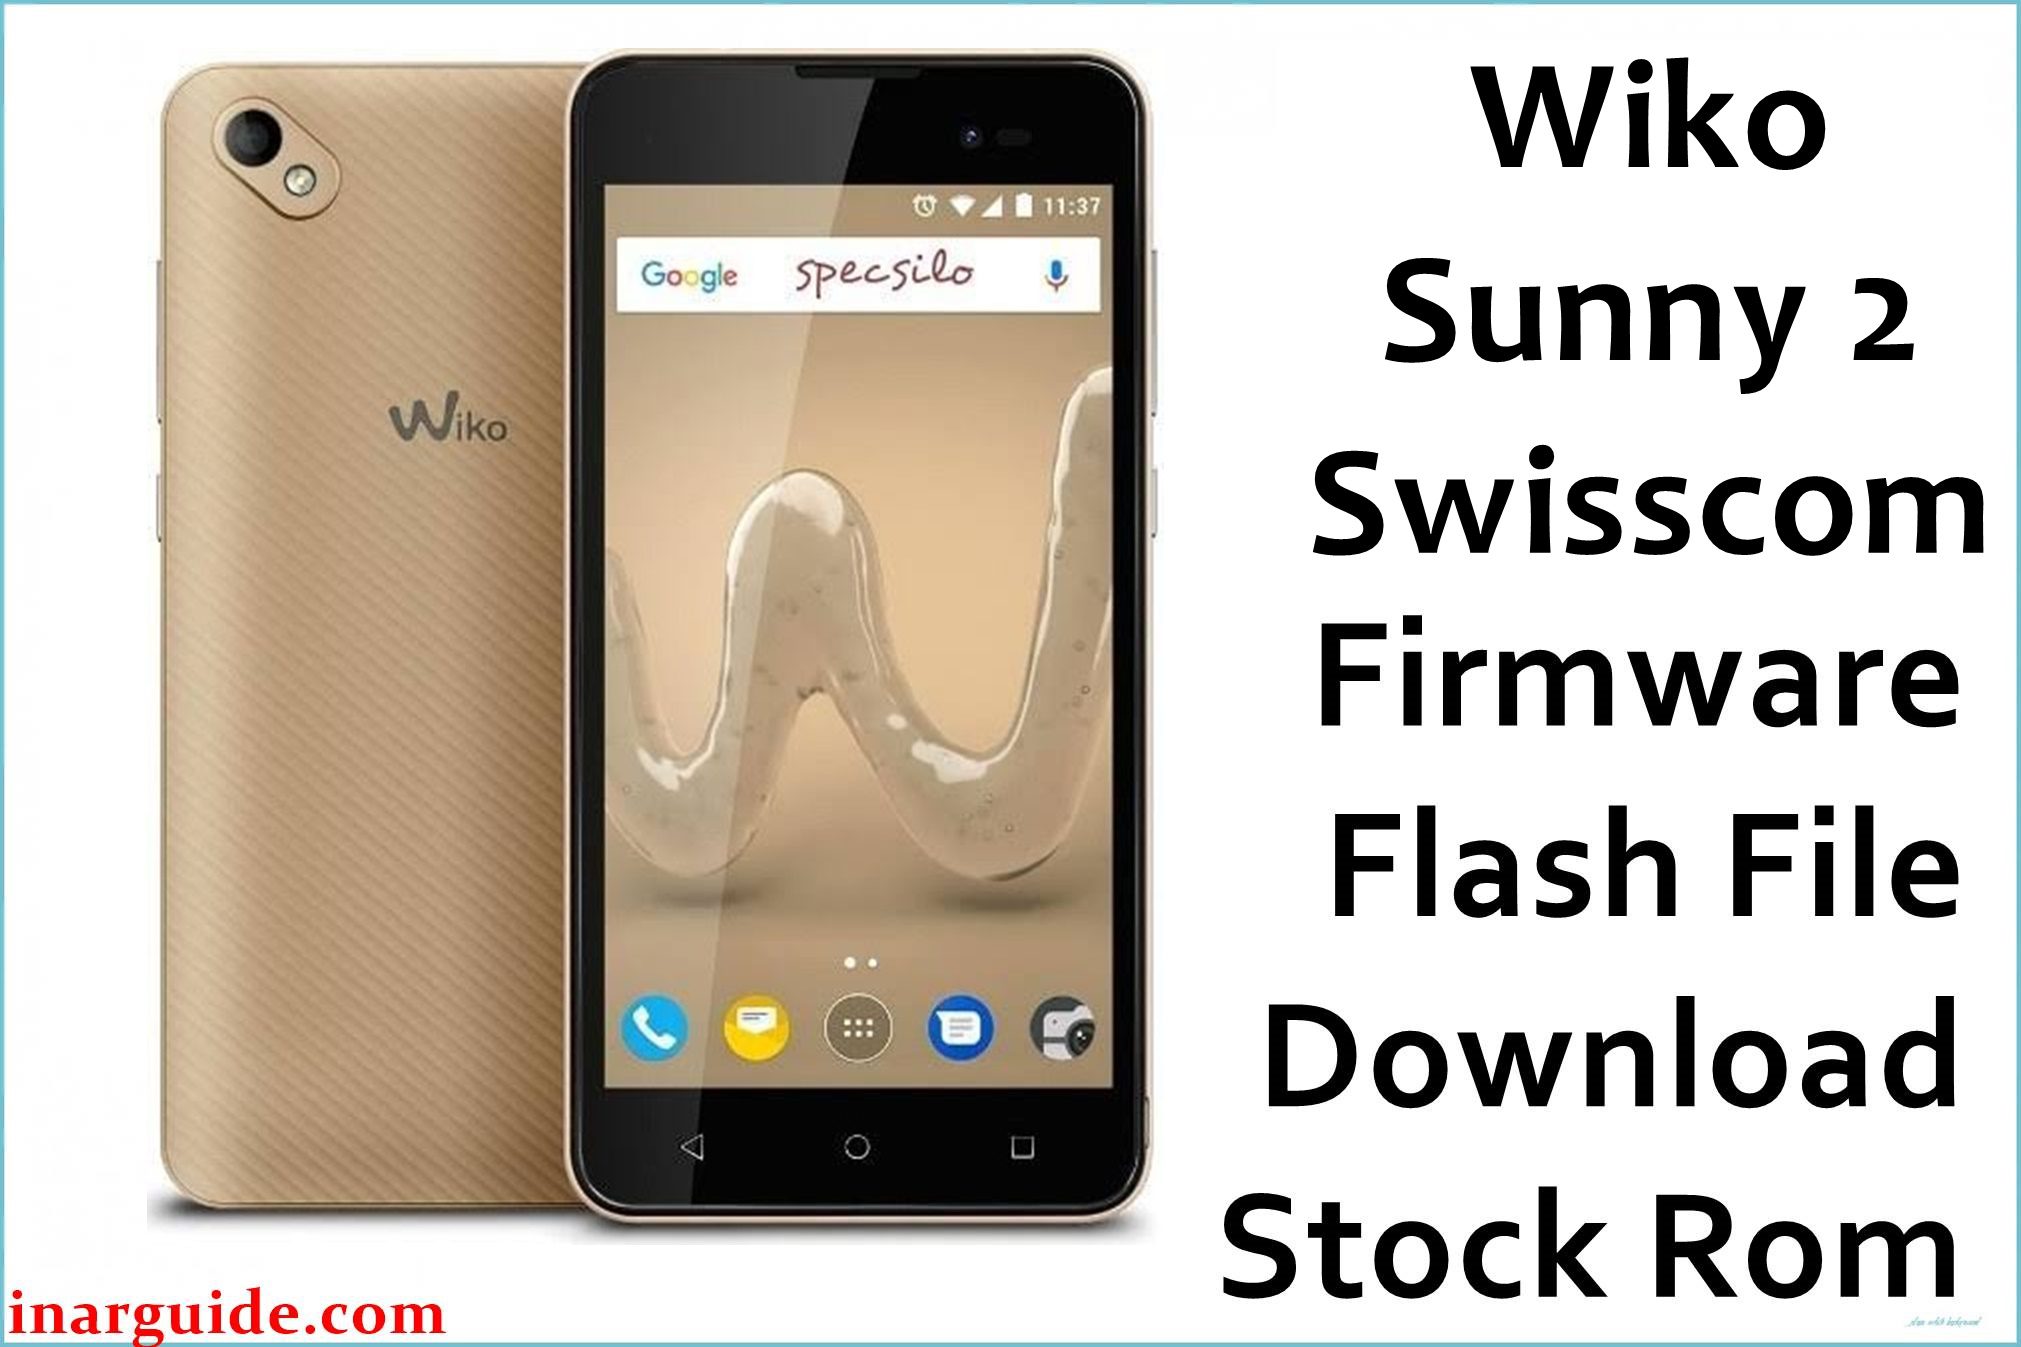 Wiko Sunny 2 Swisscom